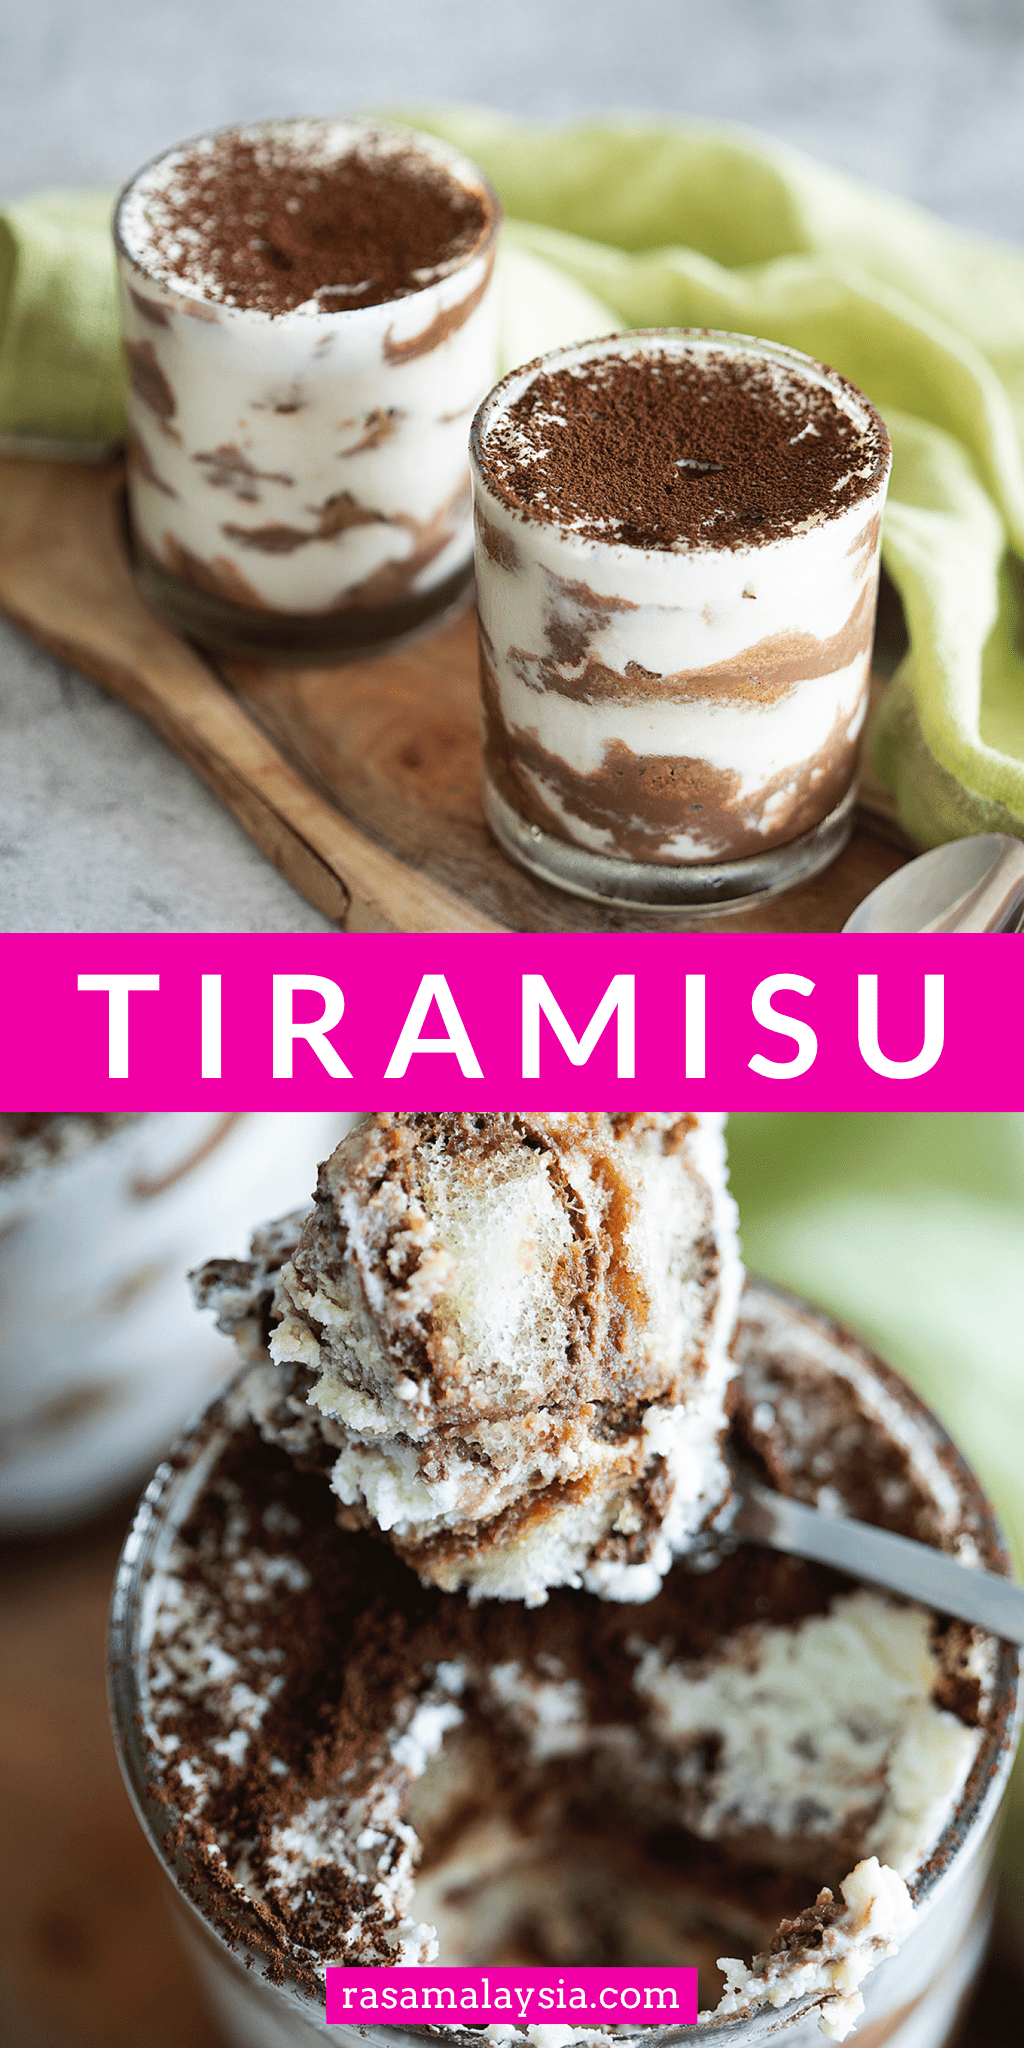 Tiramisu is a popular dessert. This heavenly eggless tiramisu recipe is delicious and easy and makes the best tiramisu.